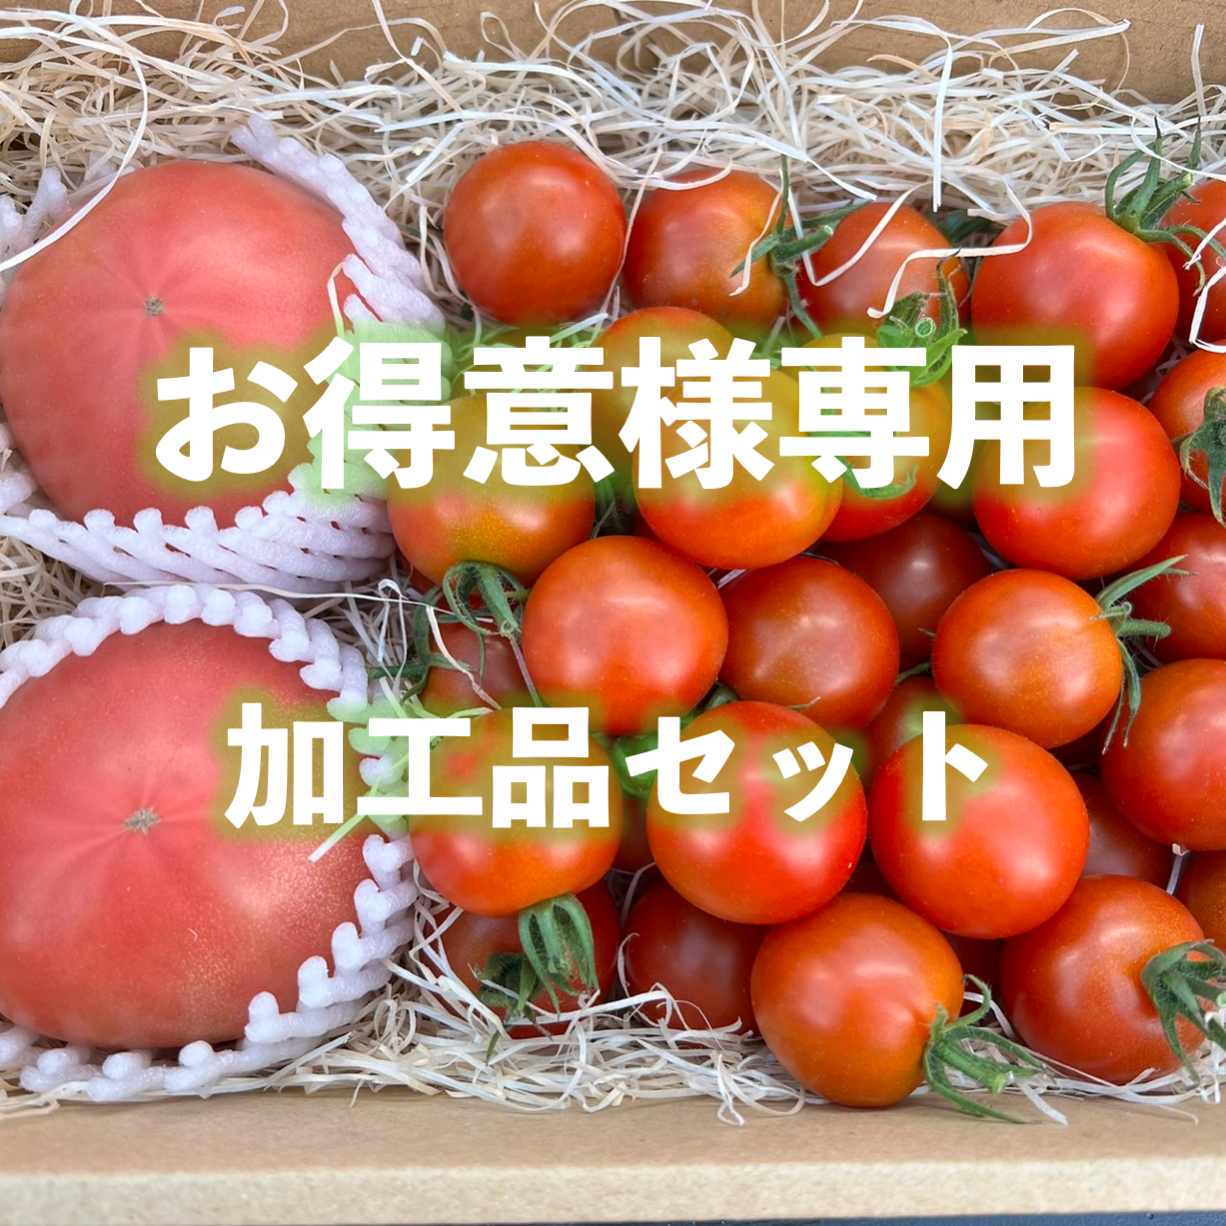 Tomato様専用品 - 虫類用品